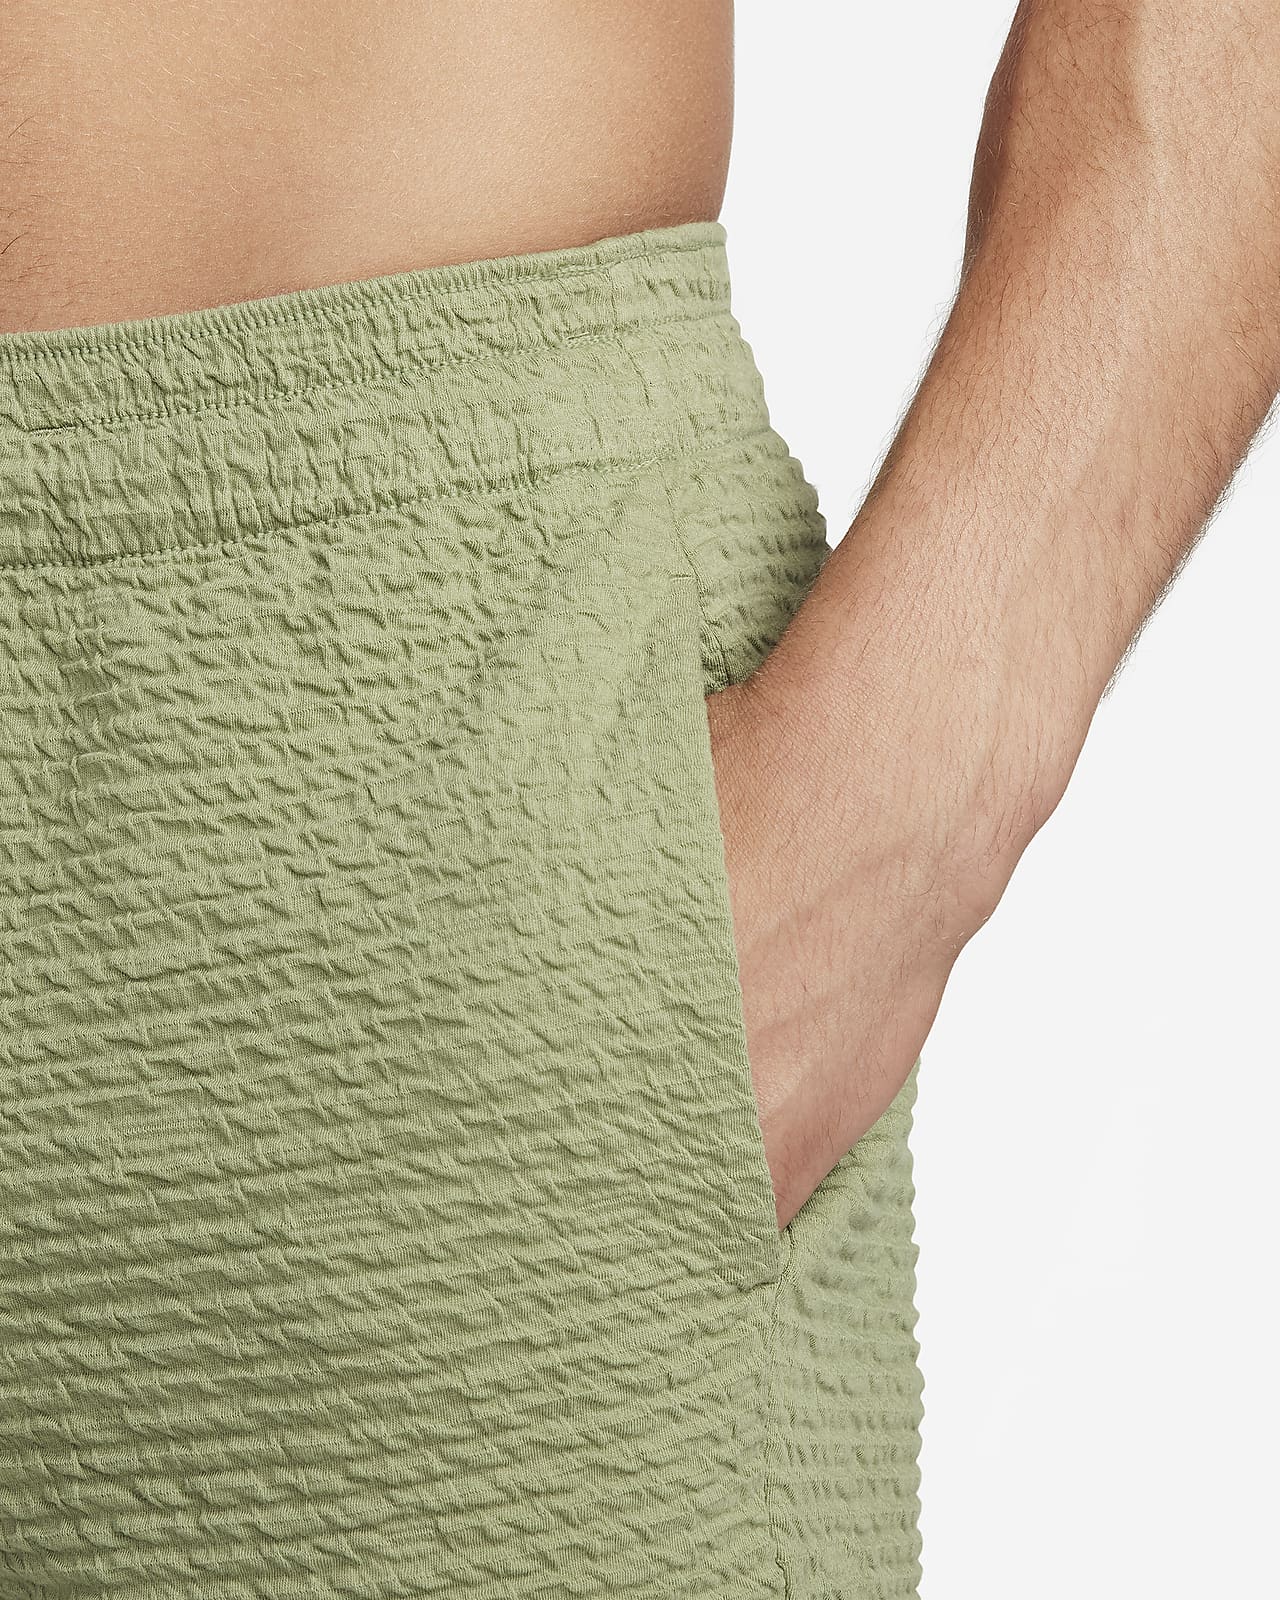 Nike Yoga Men's Dri-FIT 18cm (approx.) Unlined Shorts